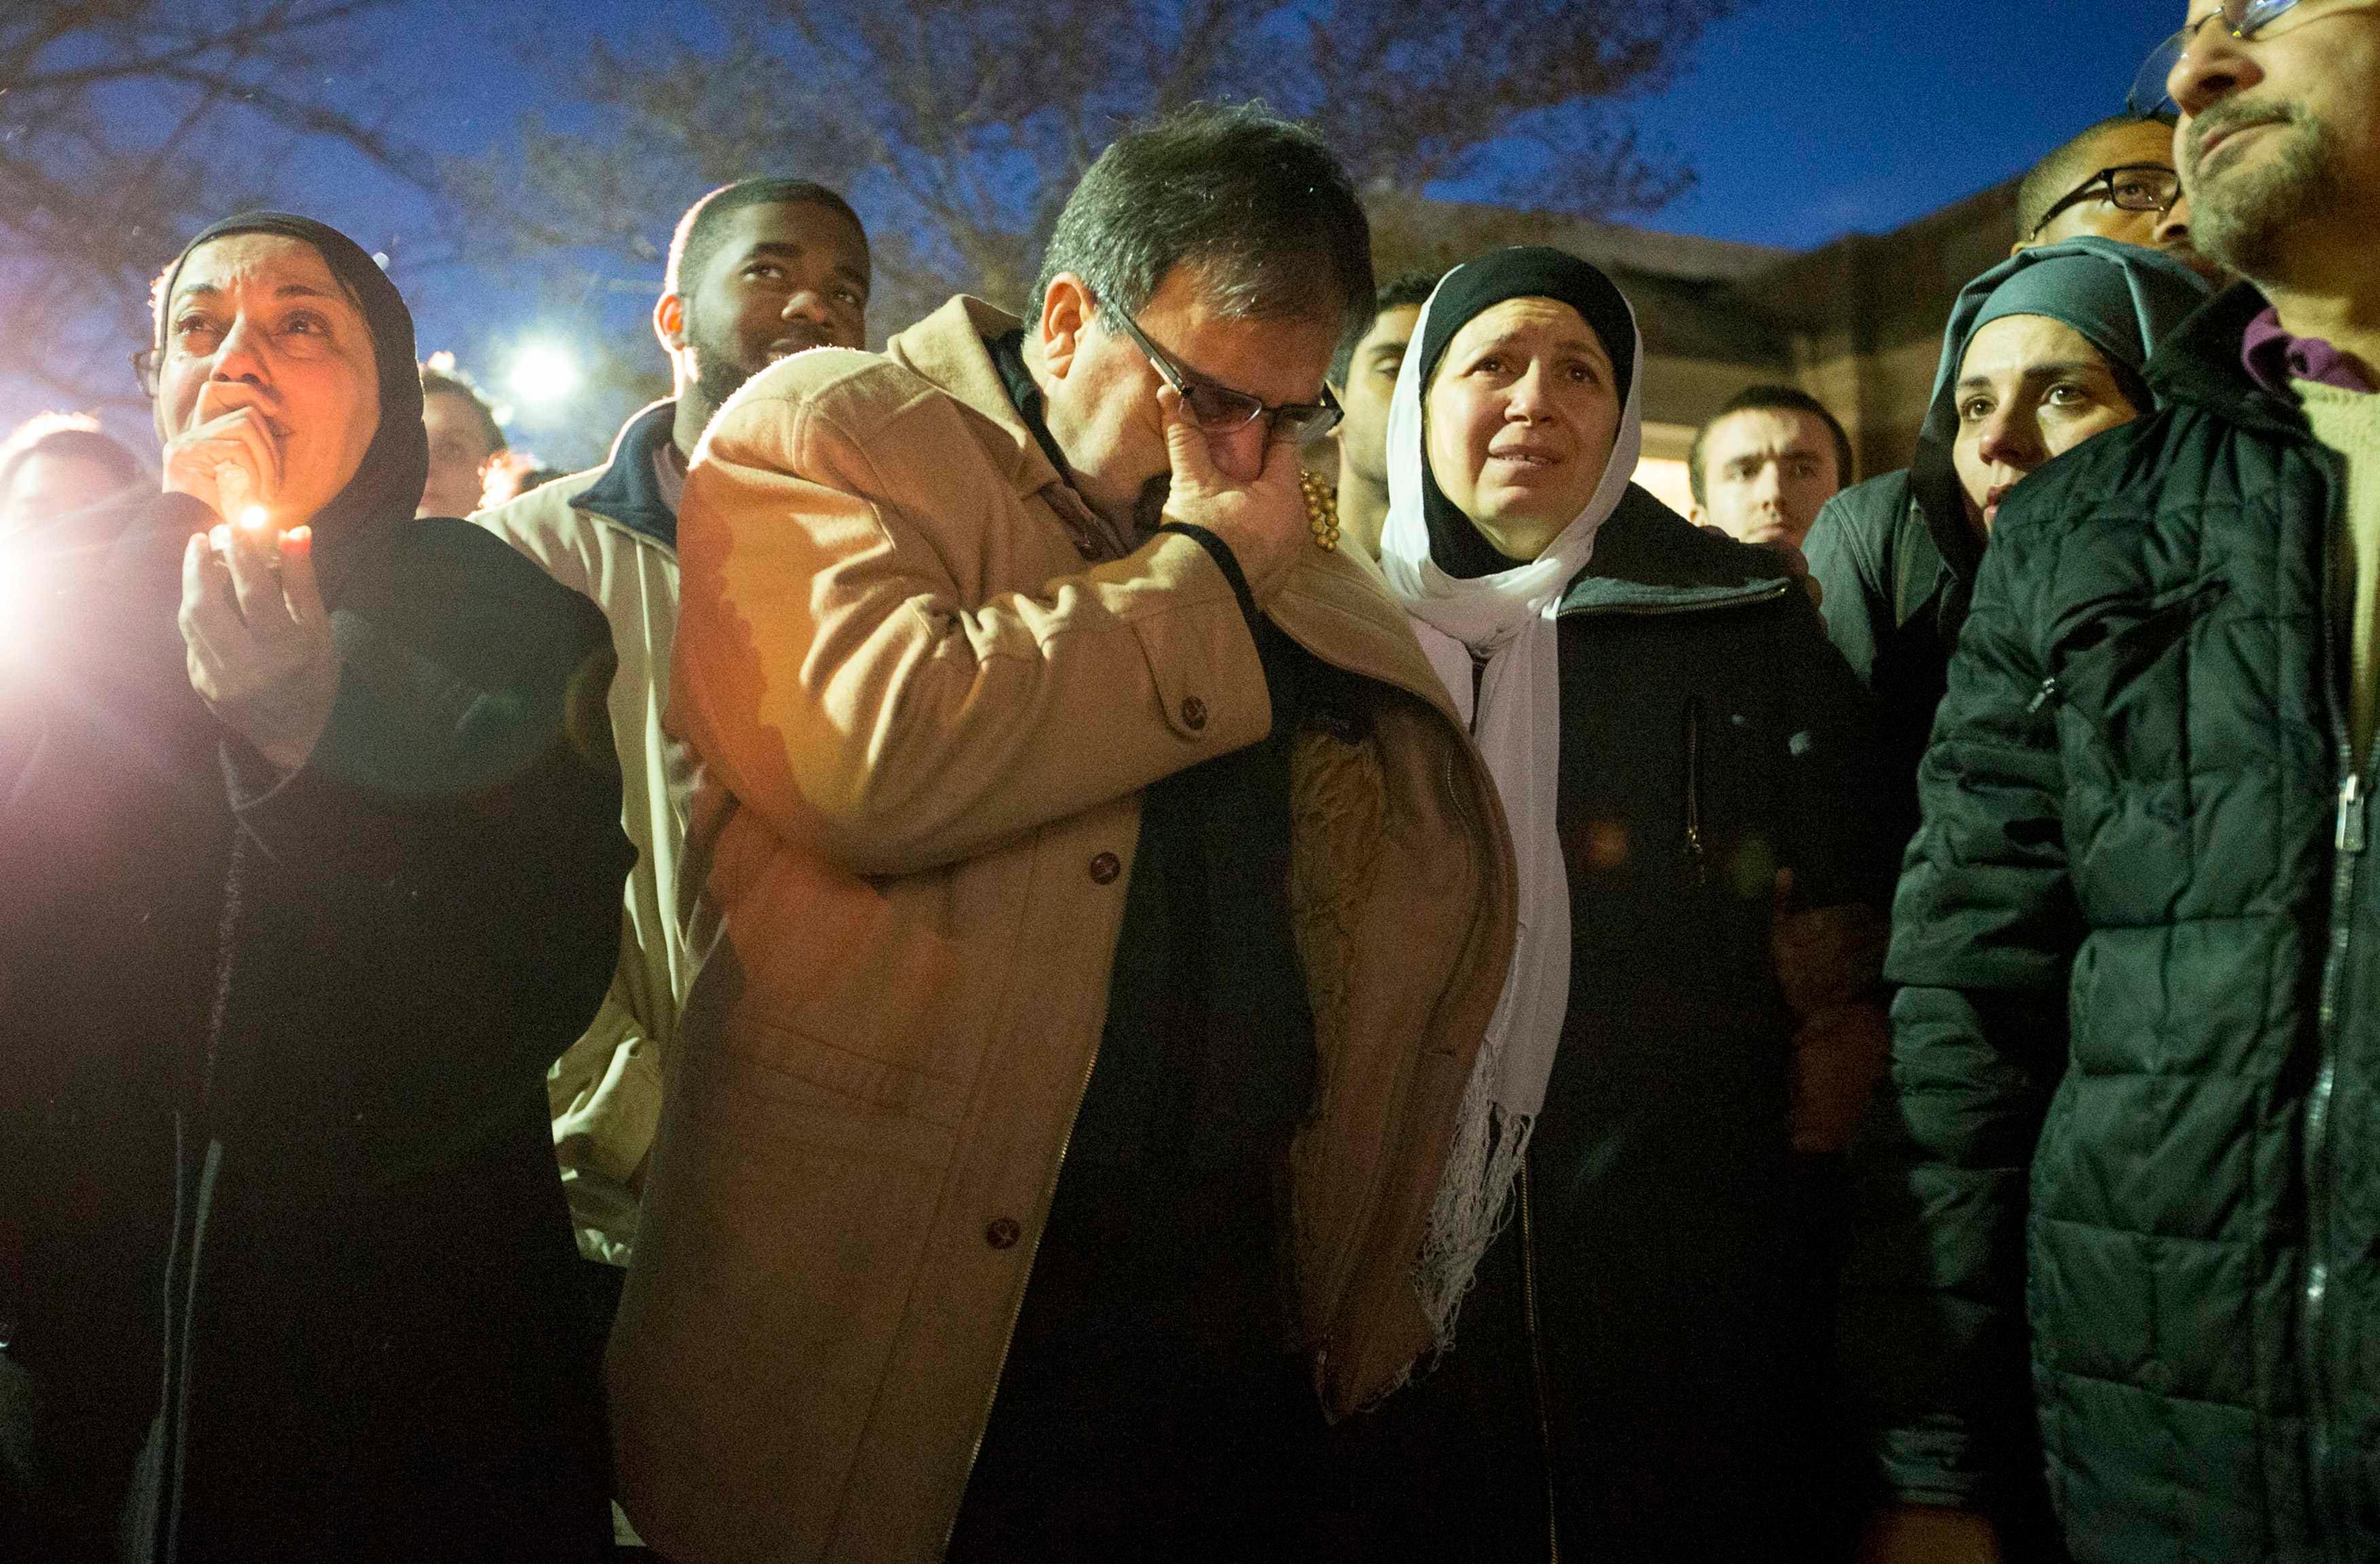 Vigil for murdered Chapel Hill Muslim students